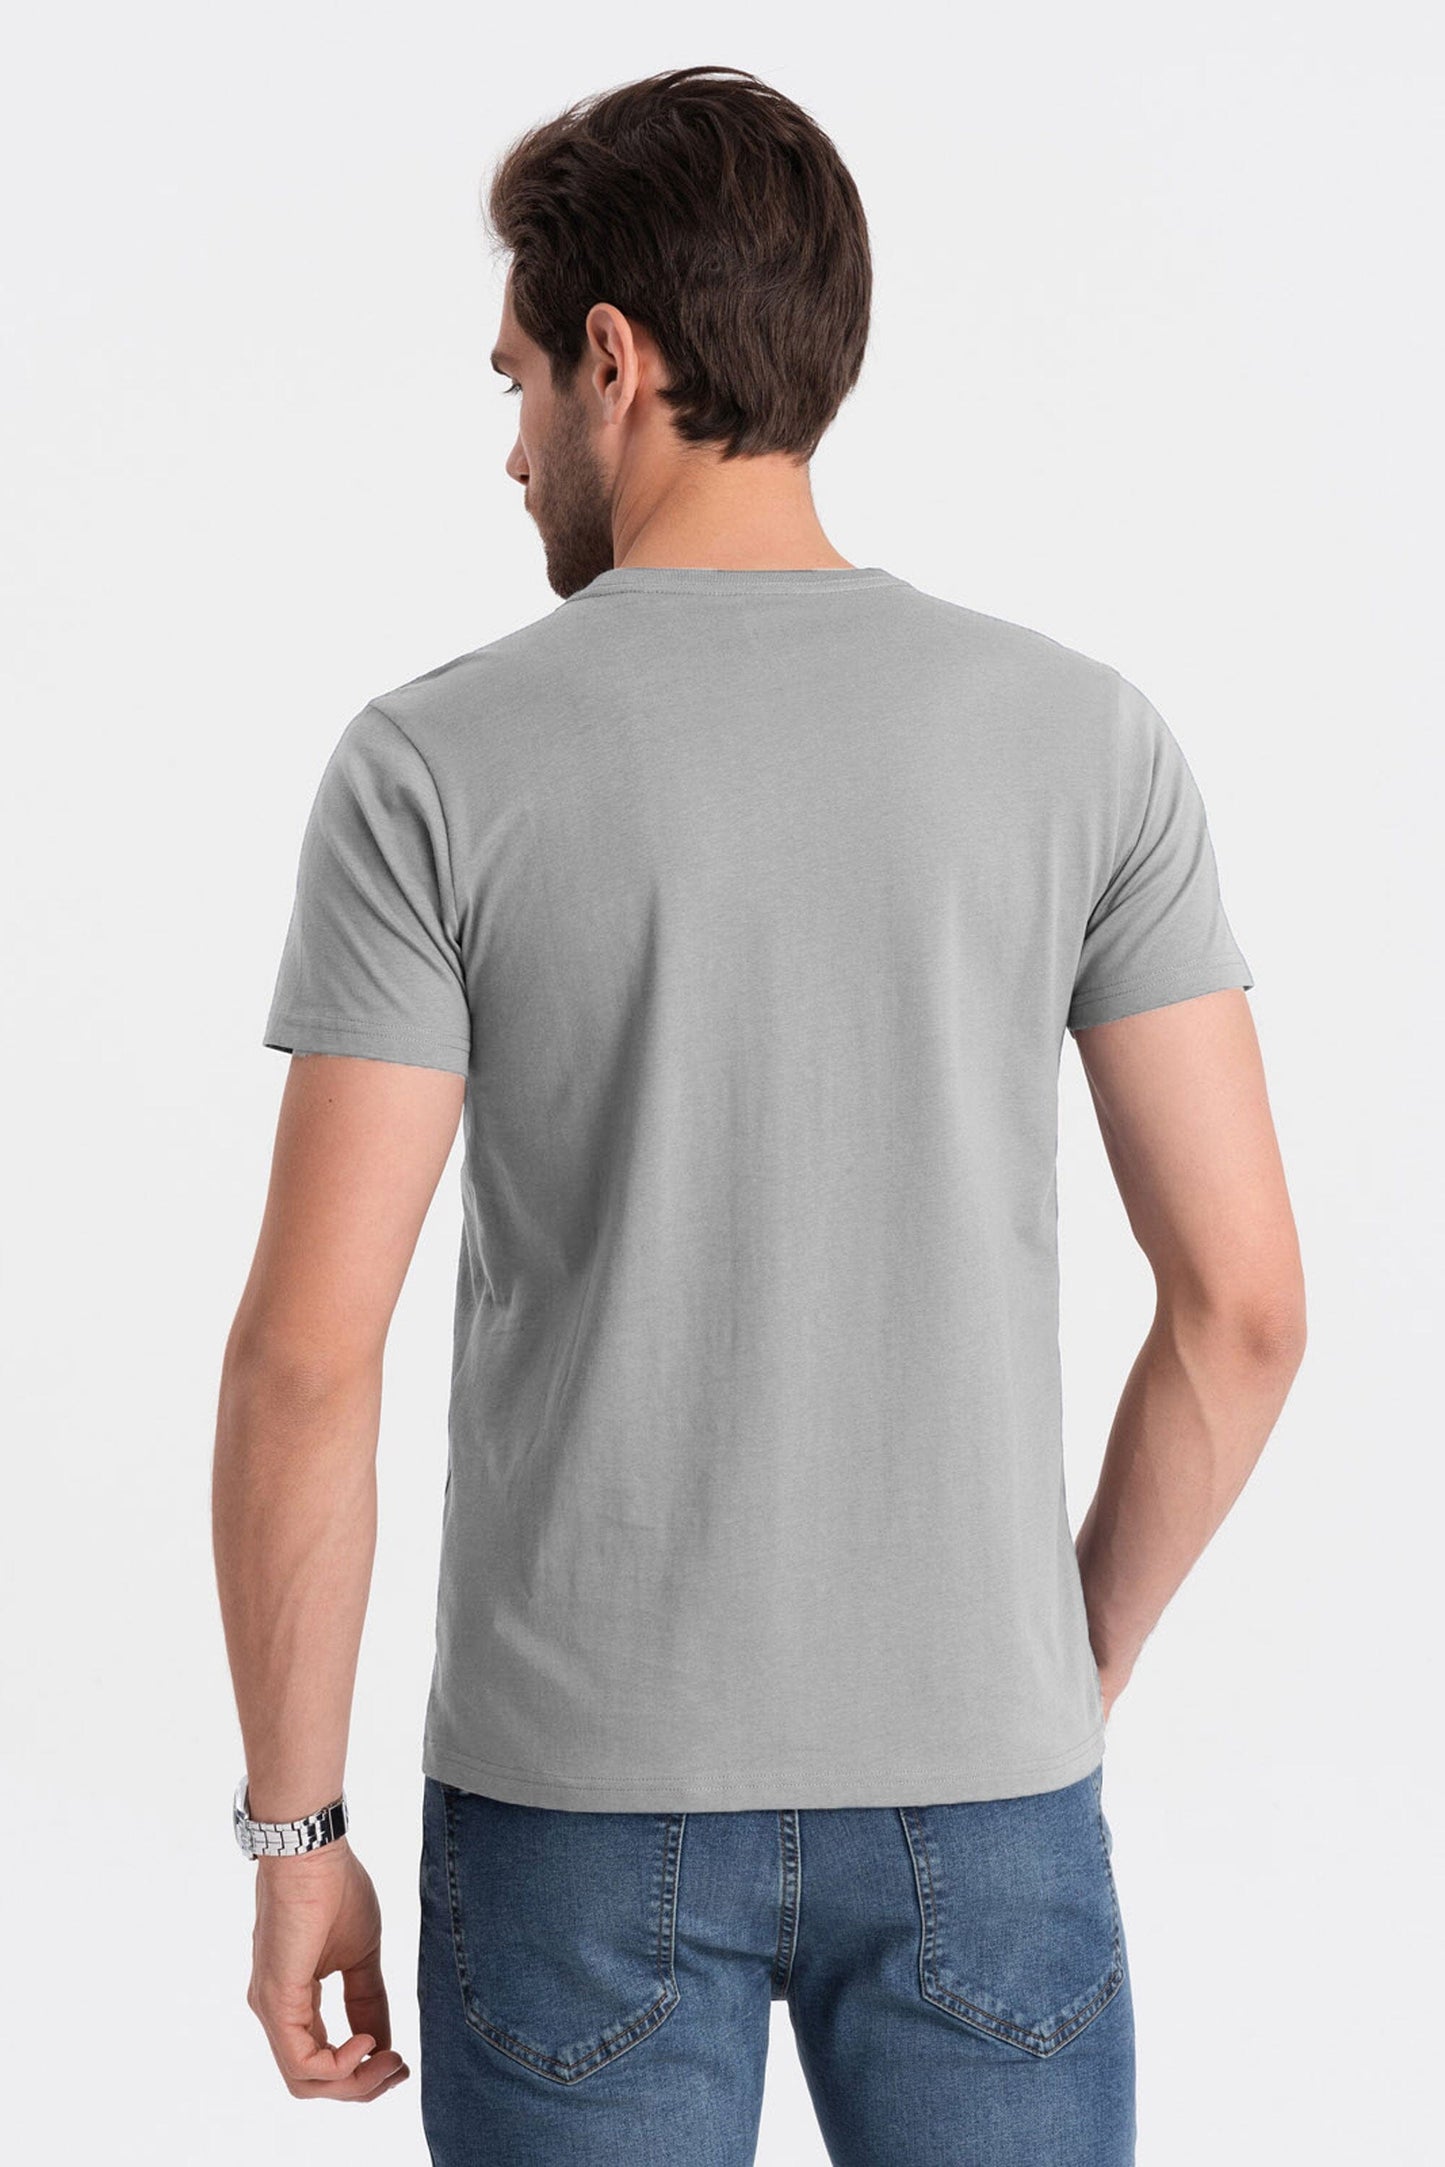 Fevlo Men's Palermo Solid Design Short Sleeve Tee Shirt Men's Tee Shirt Yasir Bin Asad (Sale Basis) 